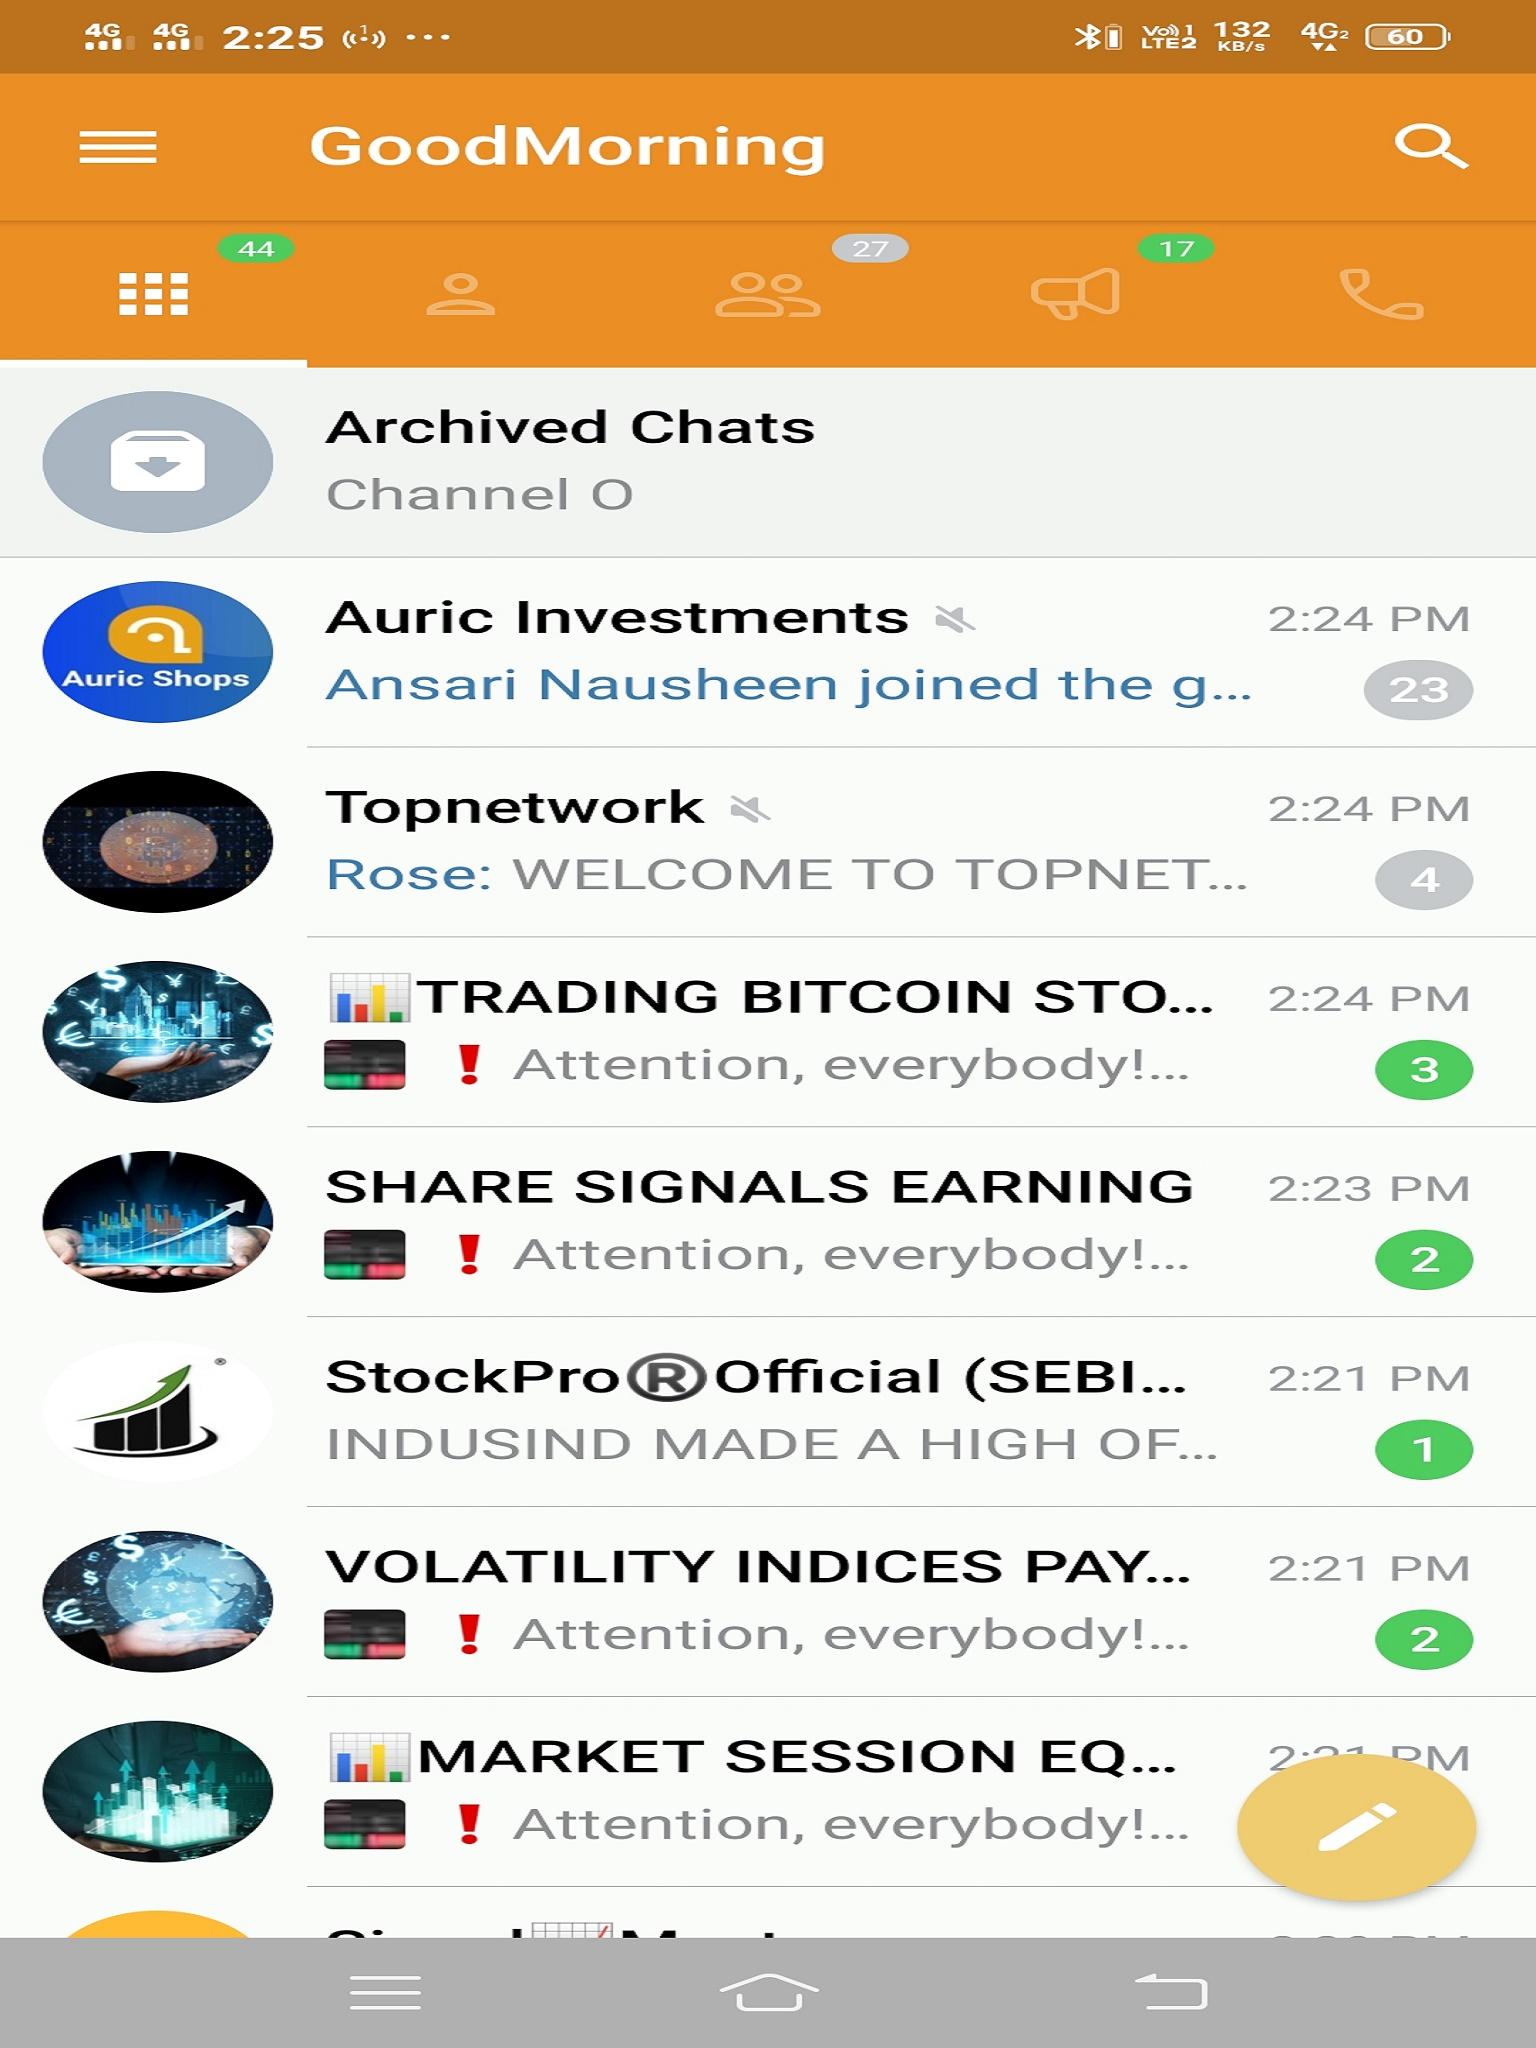 GoodMorning Messenger - New Telegram 1.0.25 Screenshot 11